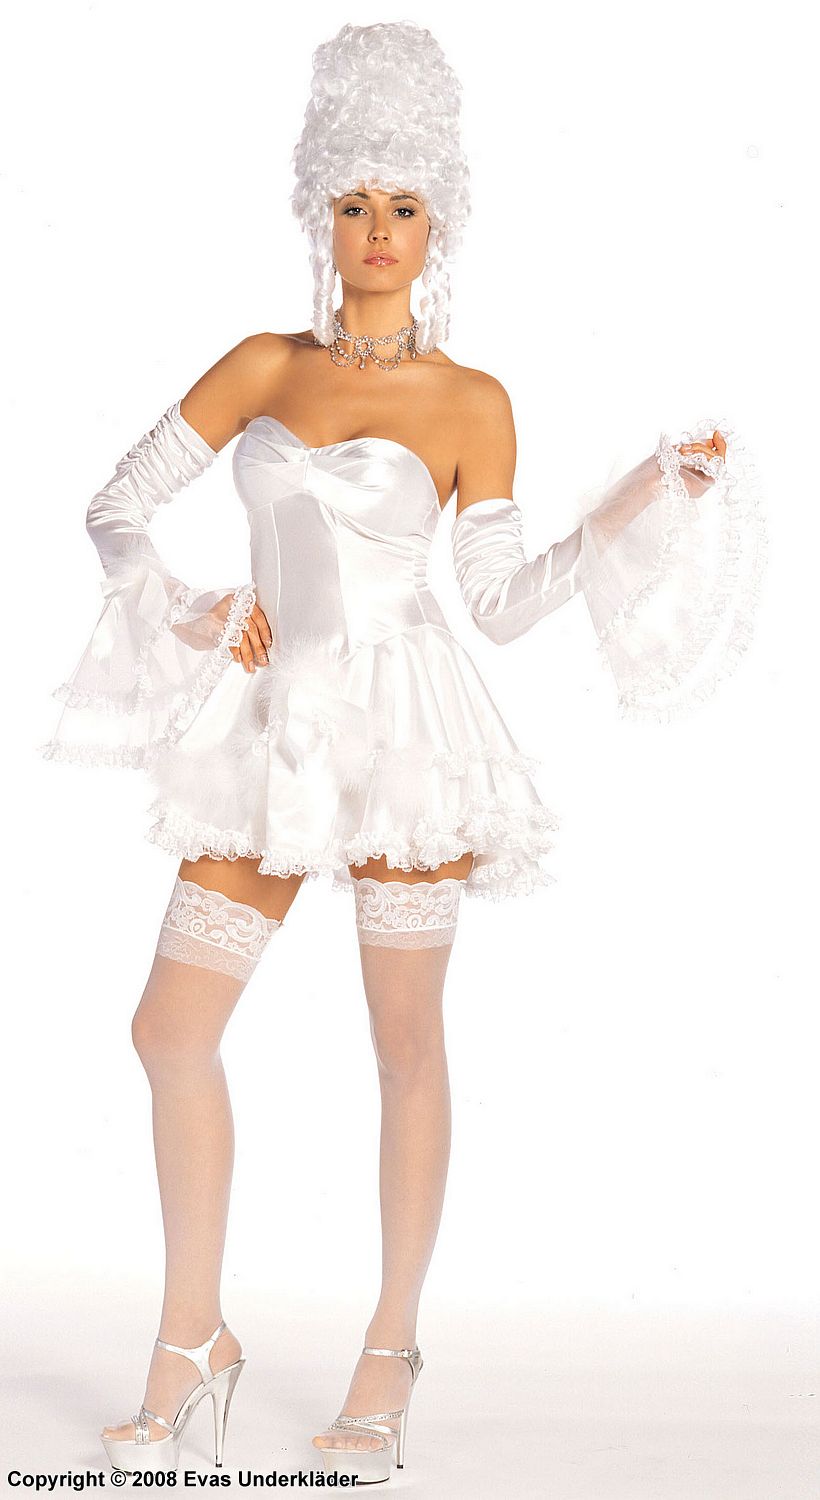 Miss Antoinette costume